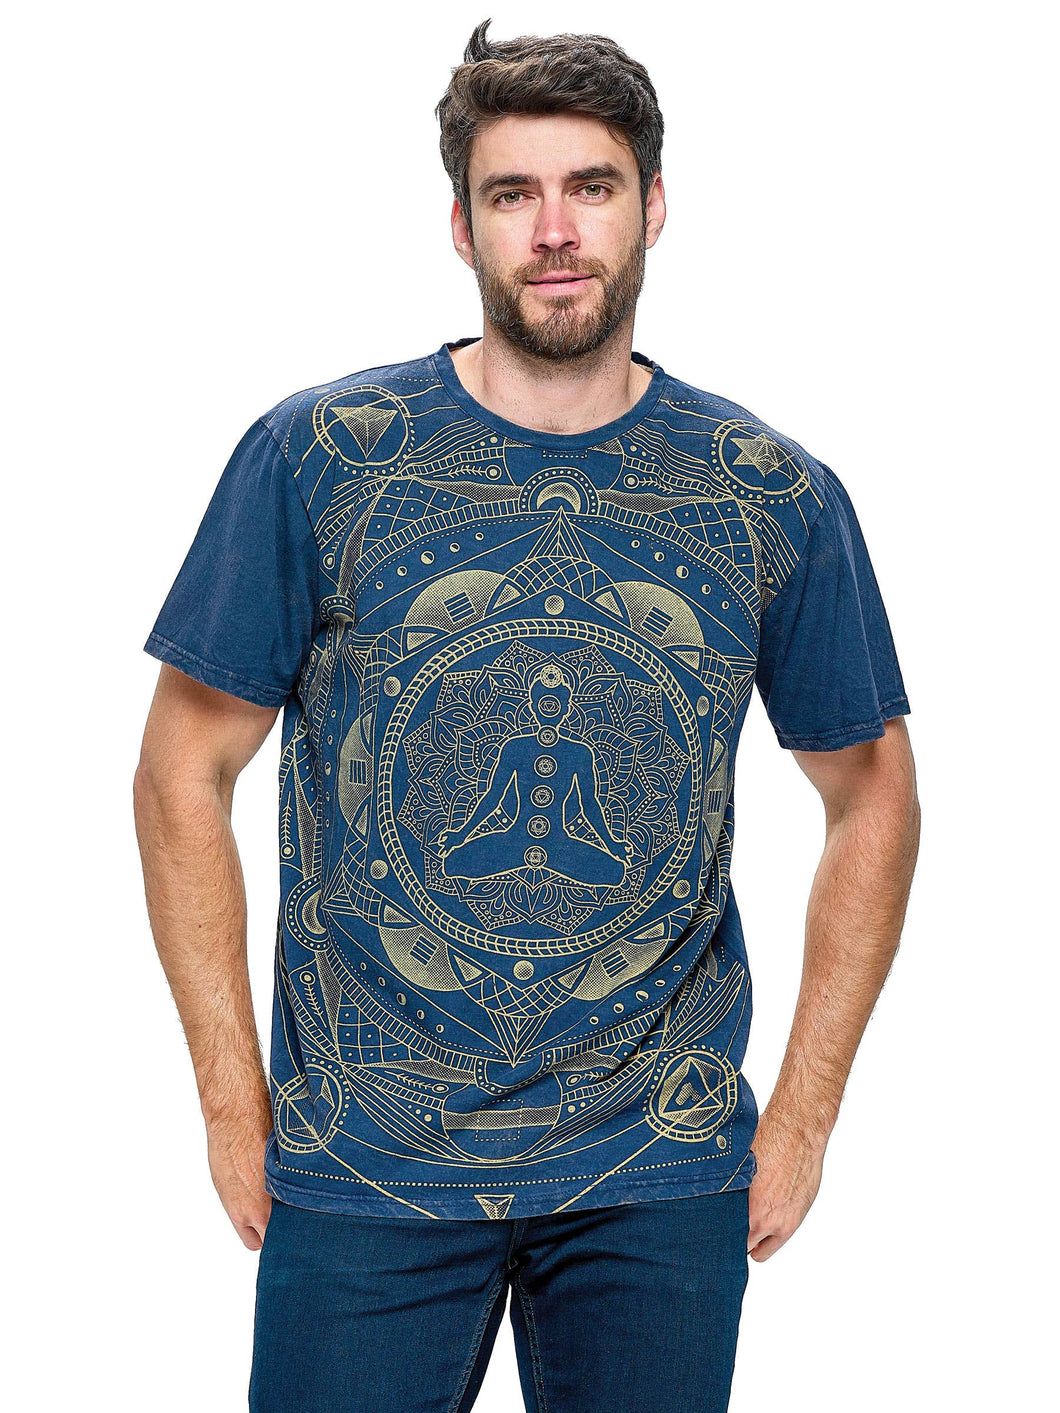 Men's T-Shirt Sacred Geometry Chakras Meditation: XL / Blue / 100% Cotton